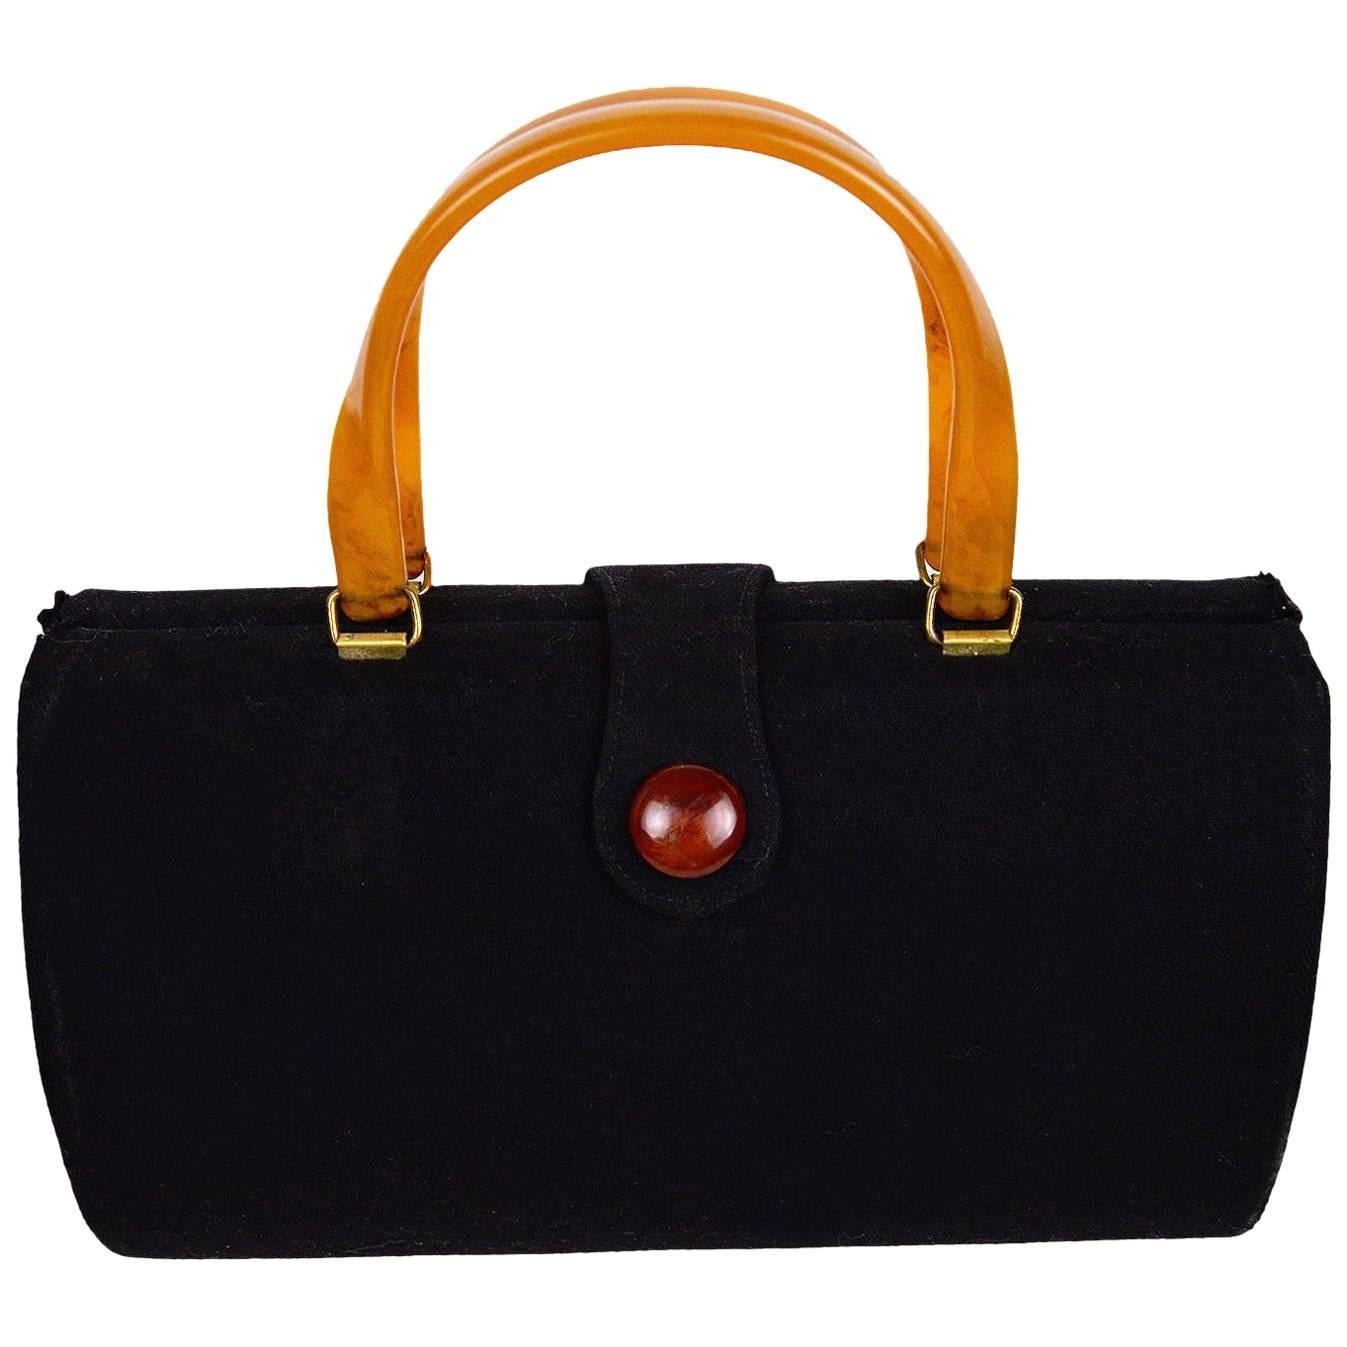 Art Deco Handbag with Butterscotch Bakelite Handles